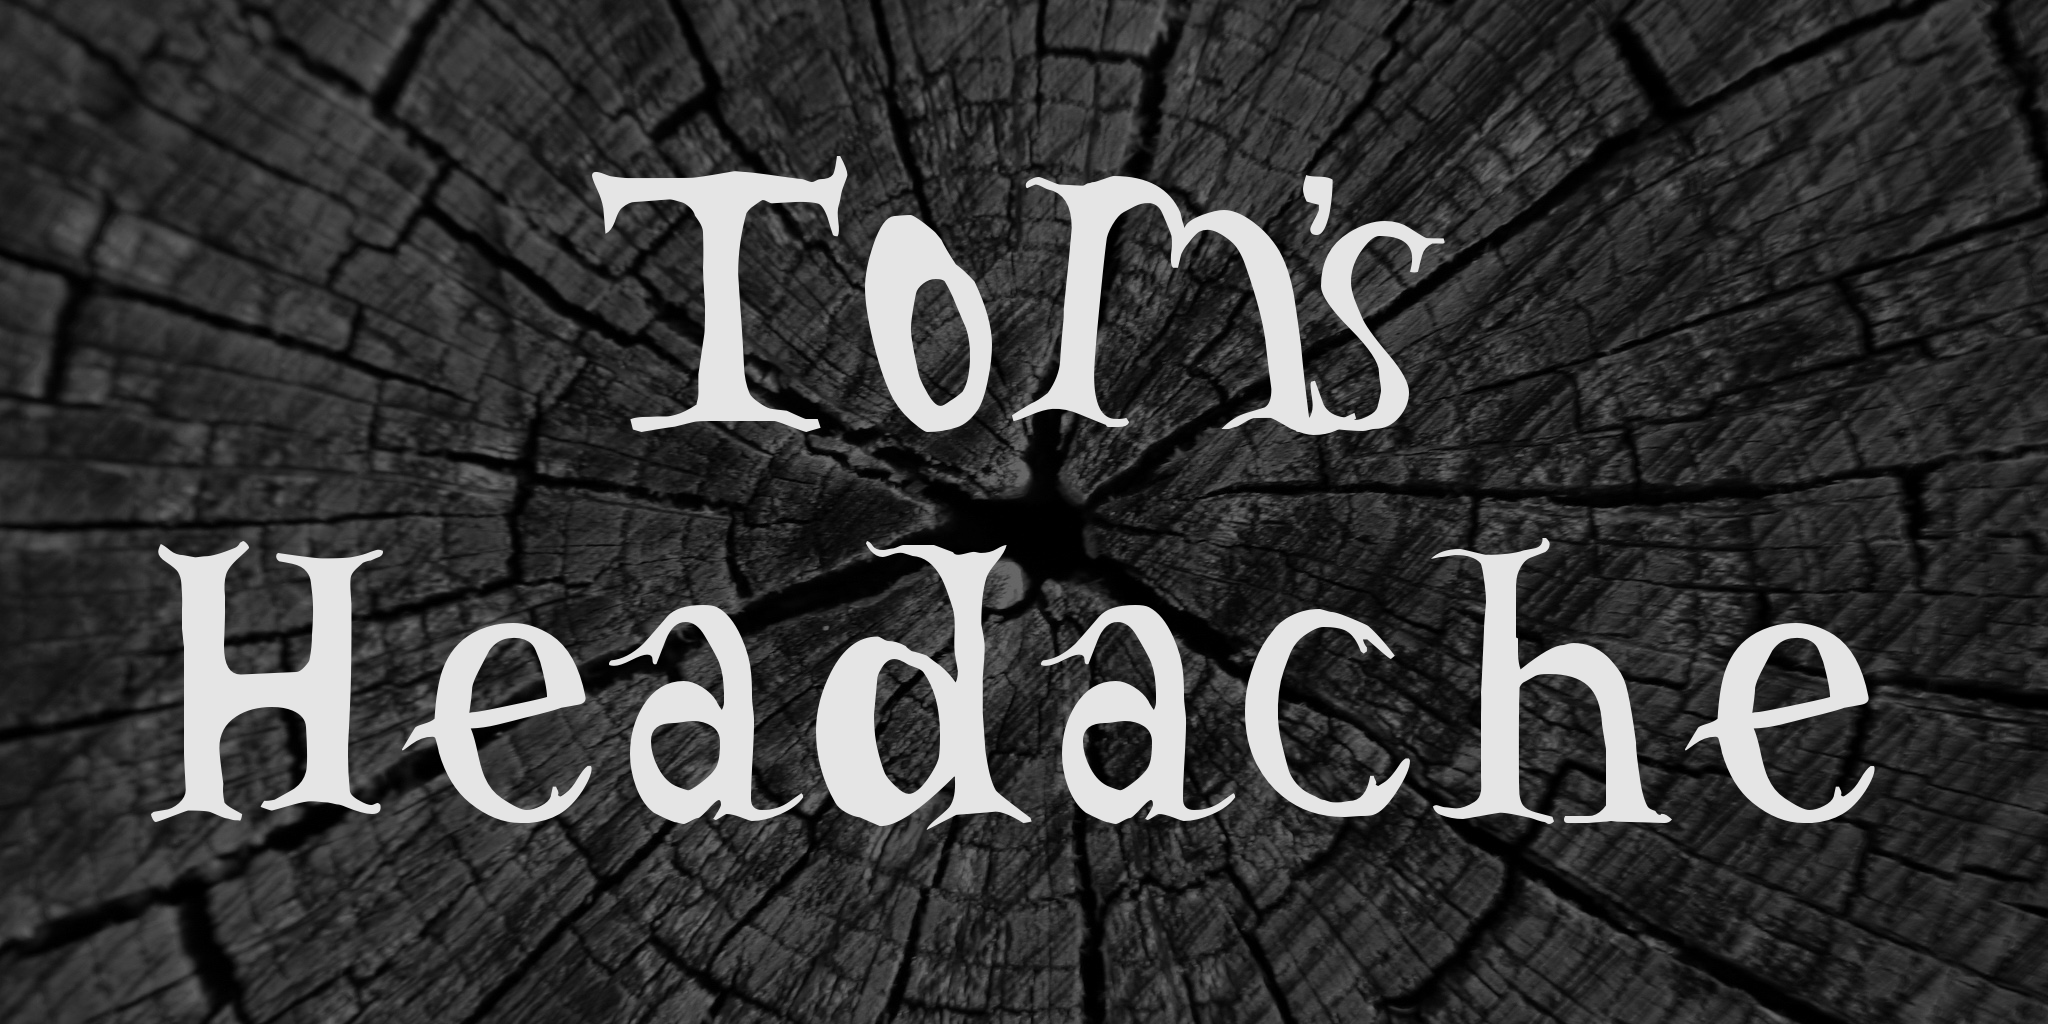 Tom's Headache